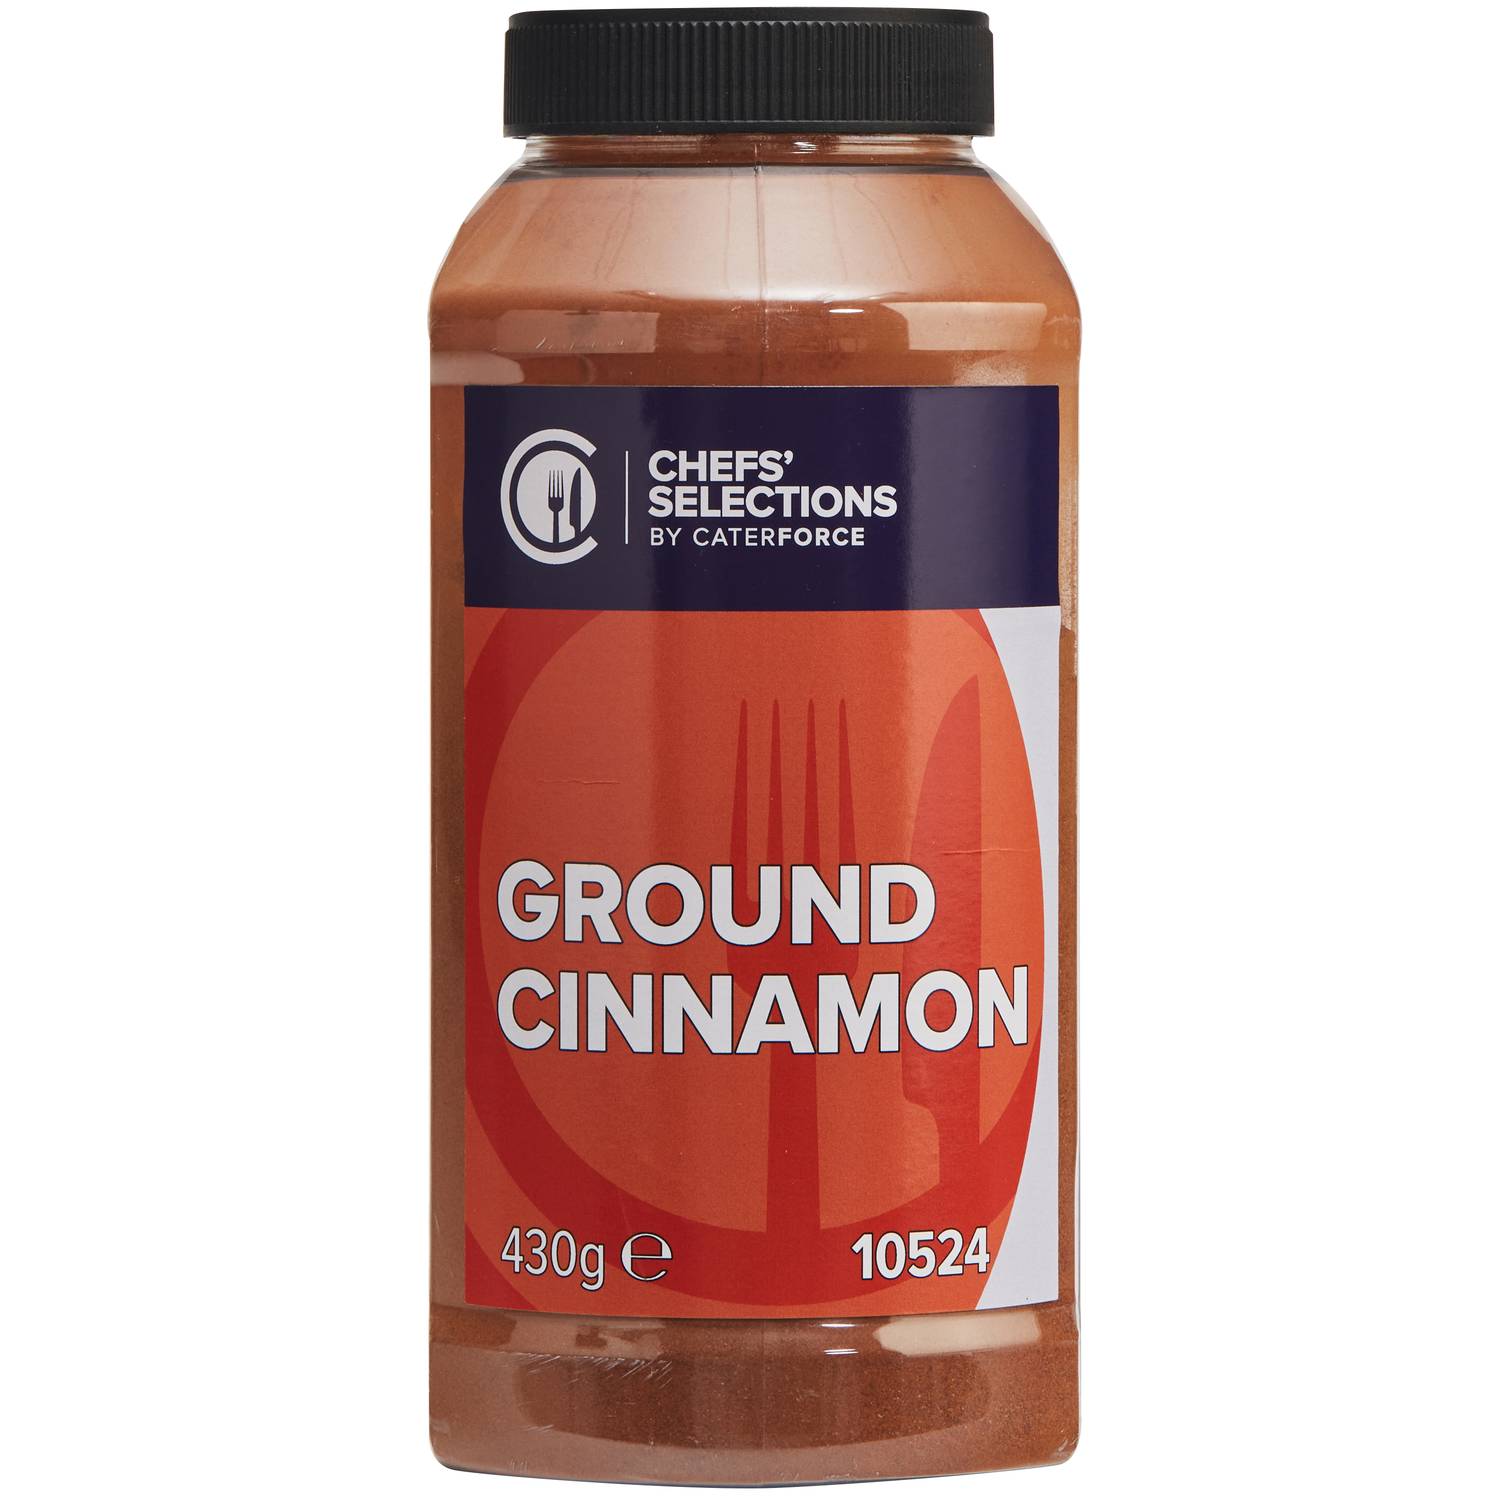 Chefs’ Selections Ground Cinnamon (6 x 430g)